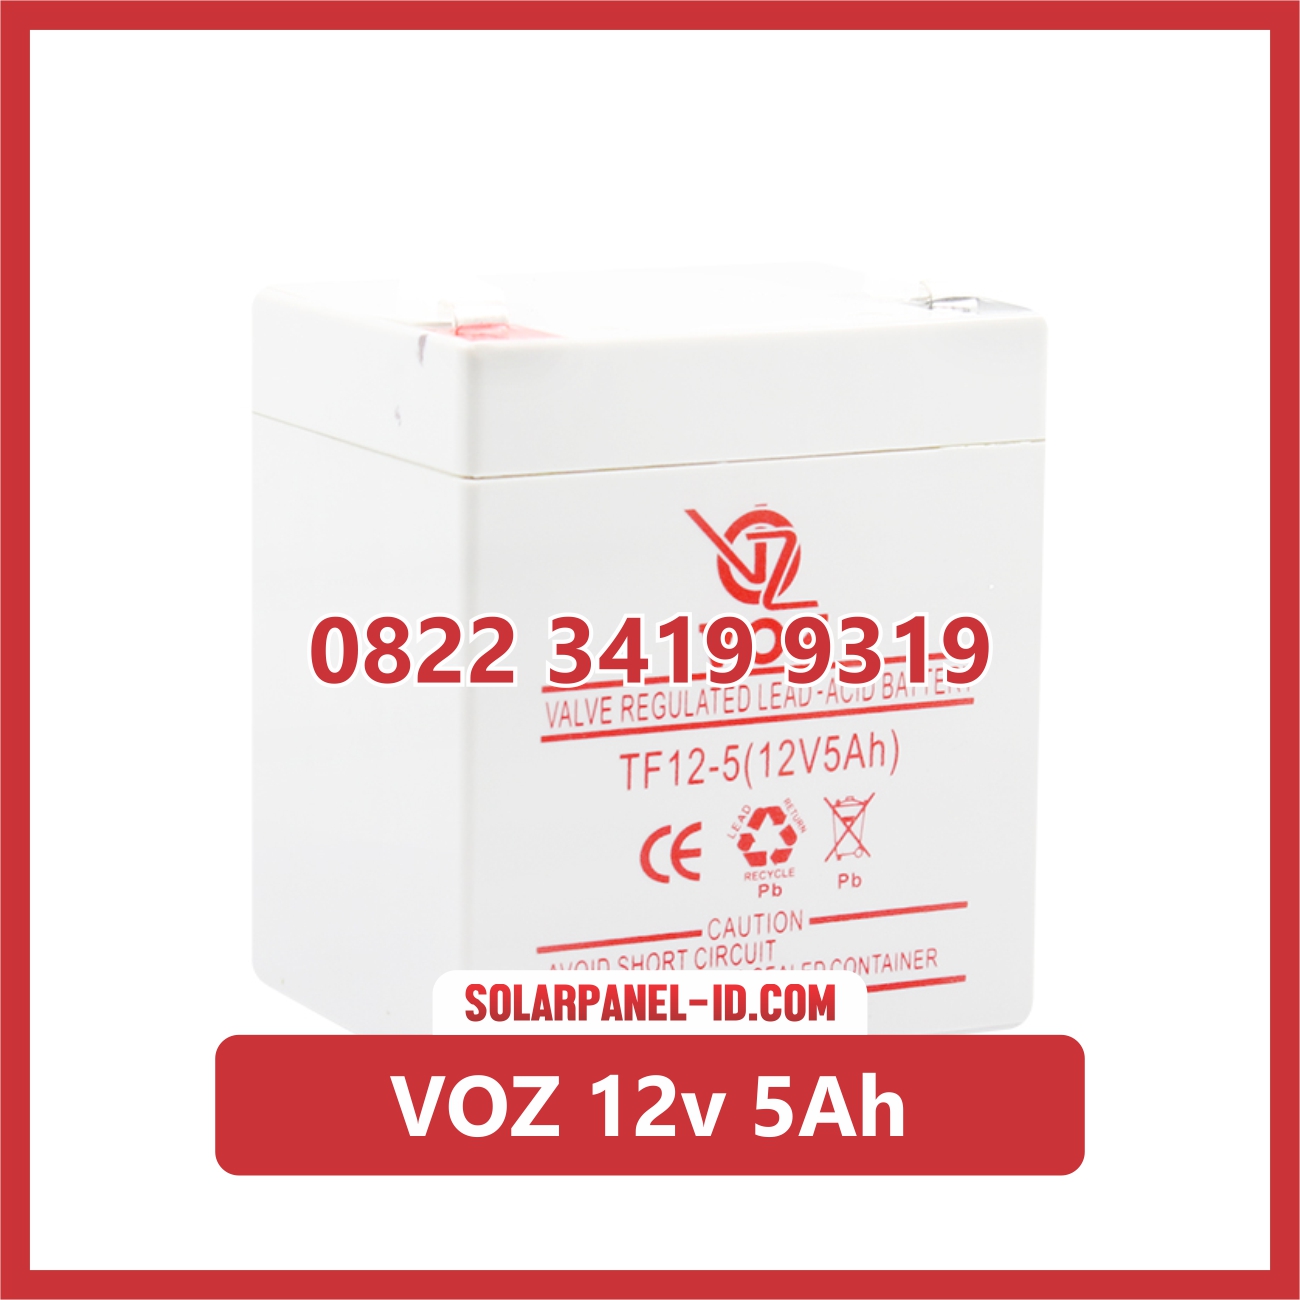 VOZ baterai kering 12v 5Ah baterai panel surya